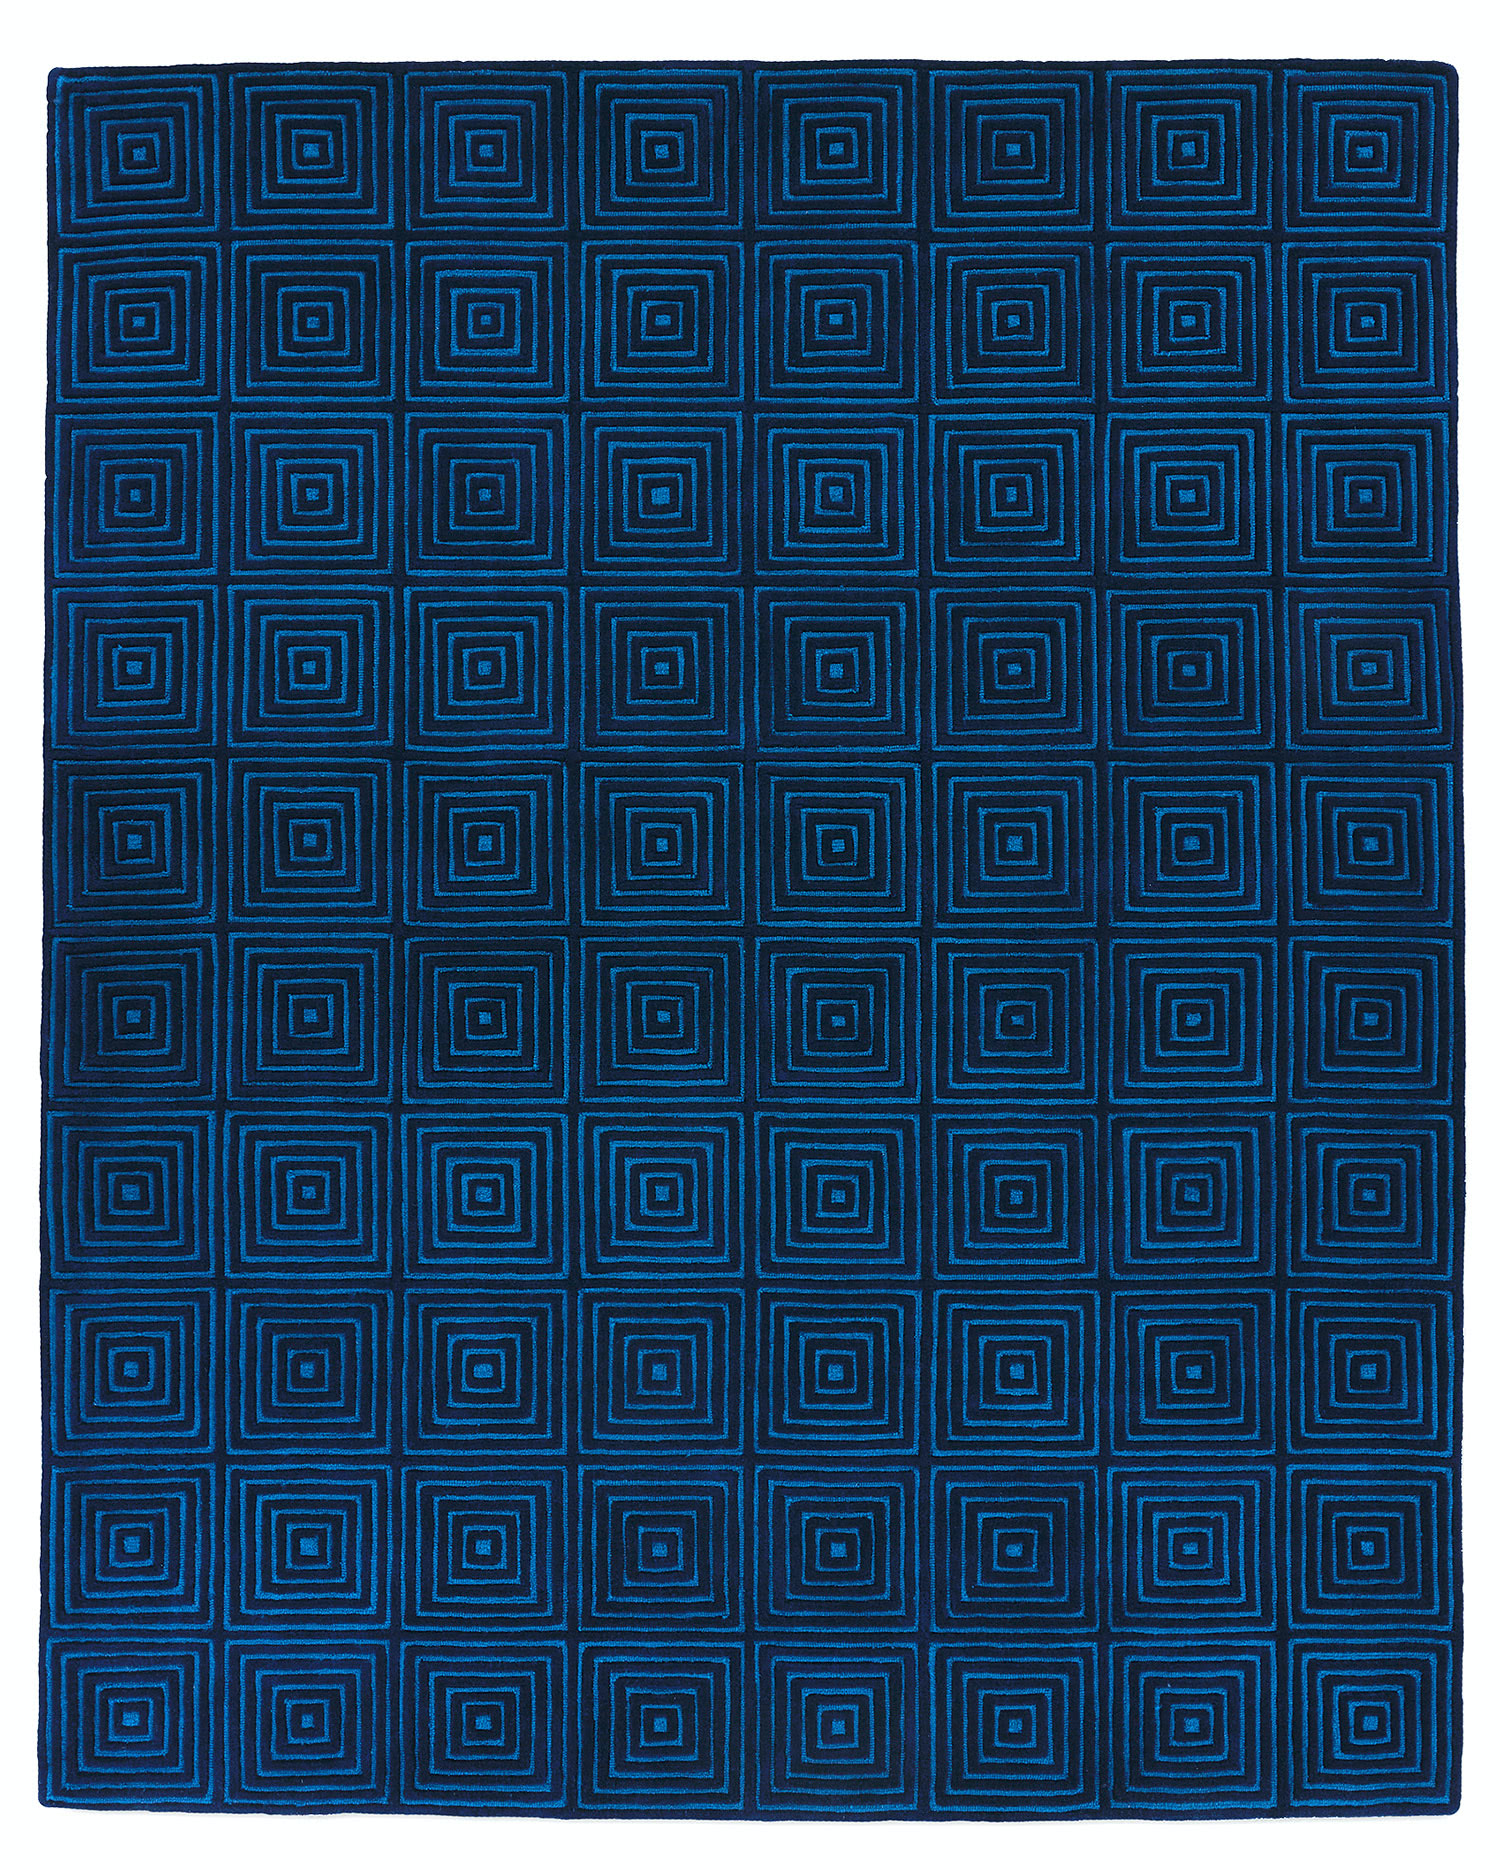 A deep blue, modern area rug called Duke Blue by Angela Adams